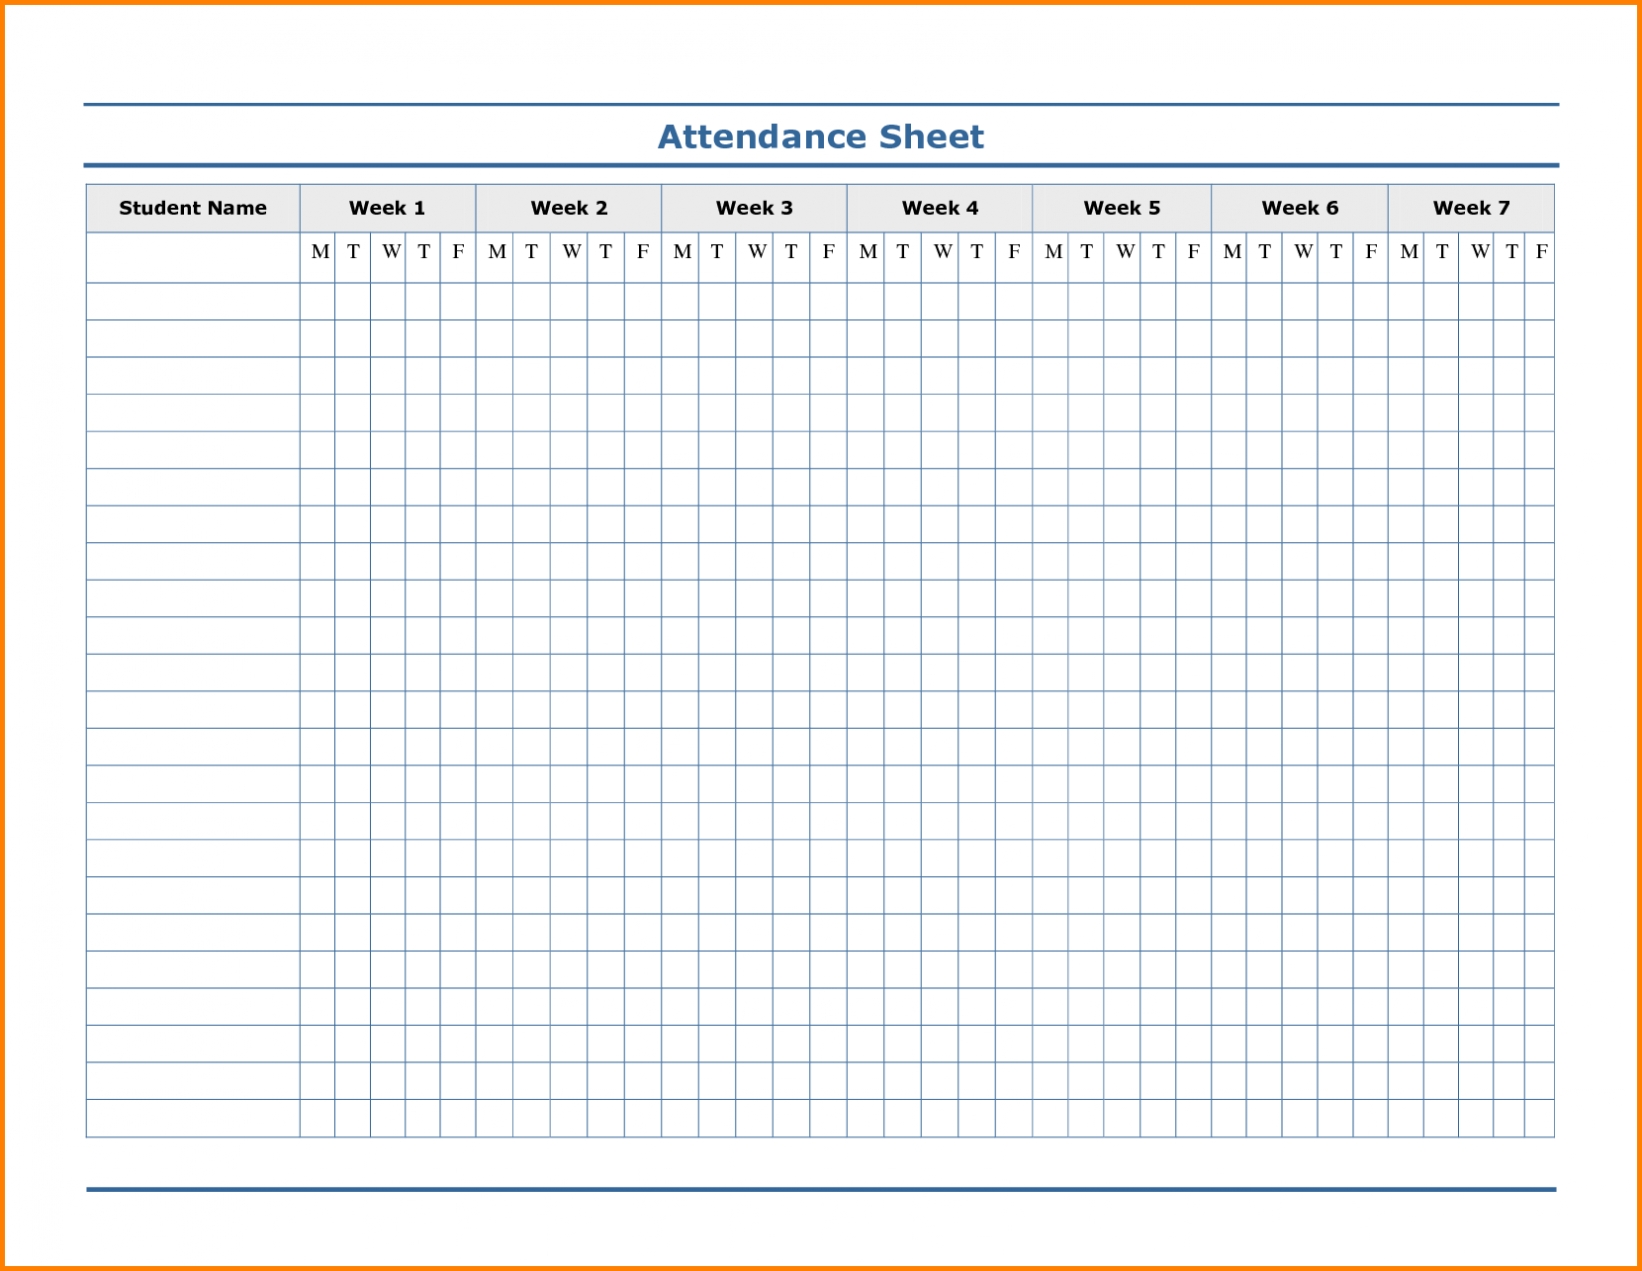 Free Printable Employee Attendance Sheet Pdf, Word, Excel  Free Printable 2020 Employee Attendance Sheet